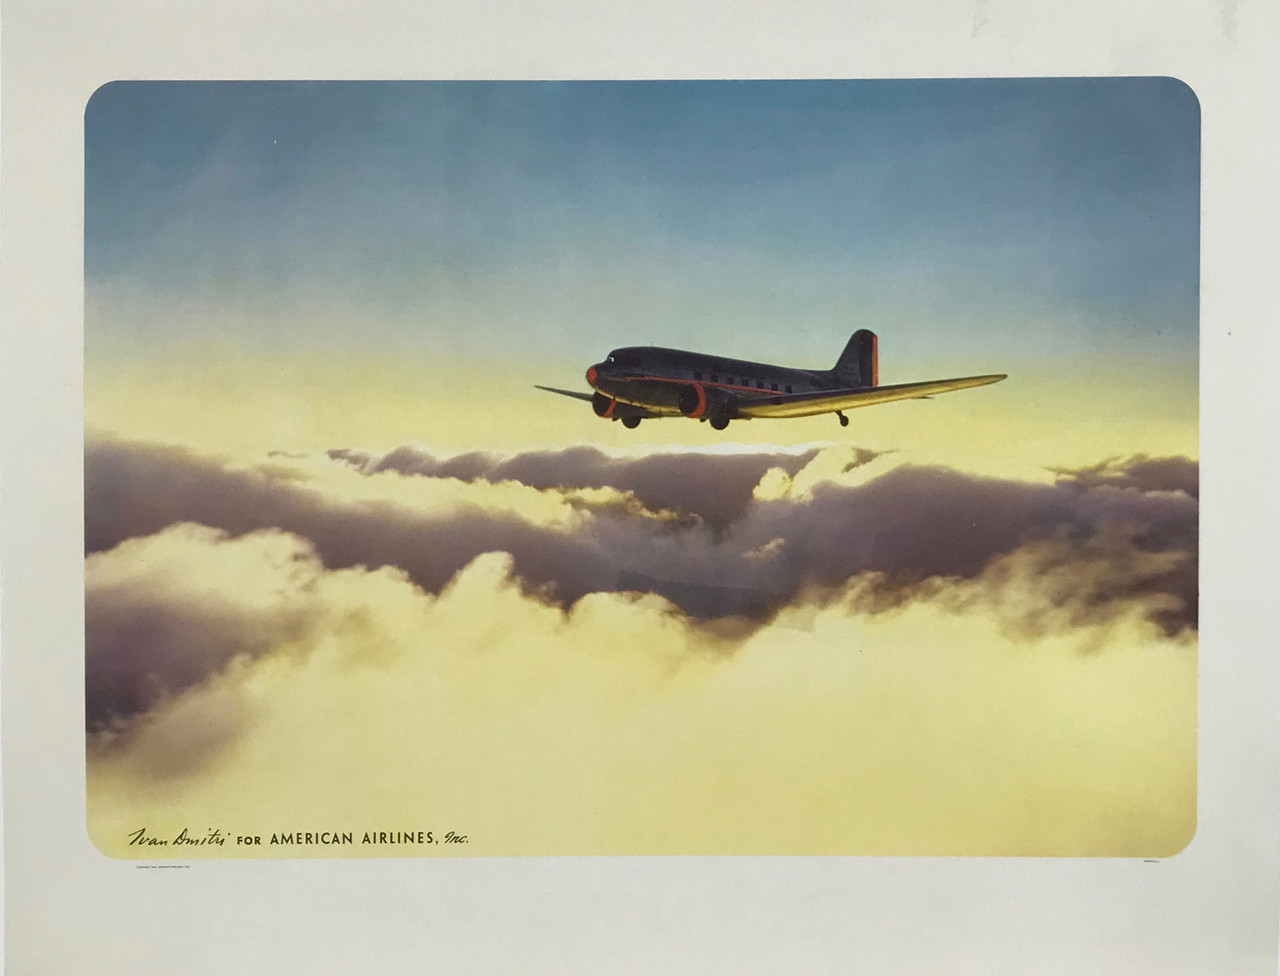 American Airlines Flagship DC-3 Photo  by Ivan Dimitr Original 1941 Vintage Passenger Plane Travel Advertisement Lithograph Poster Linen Backed.